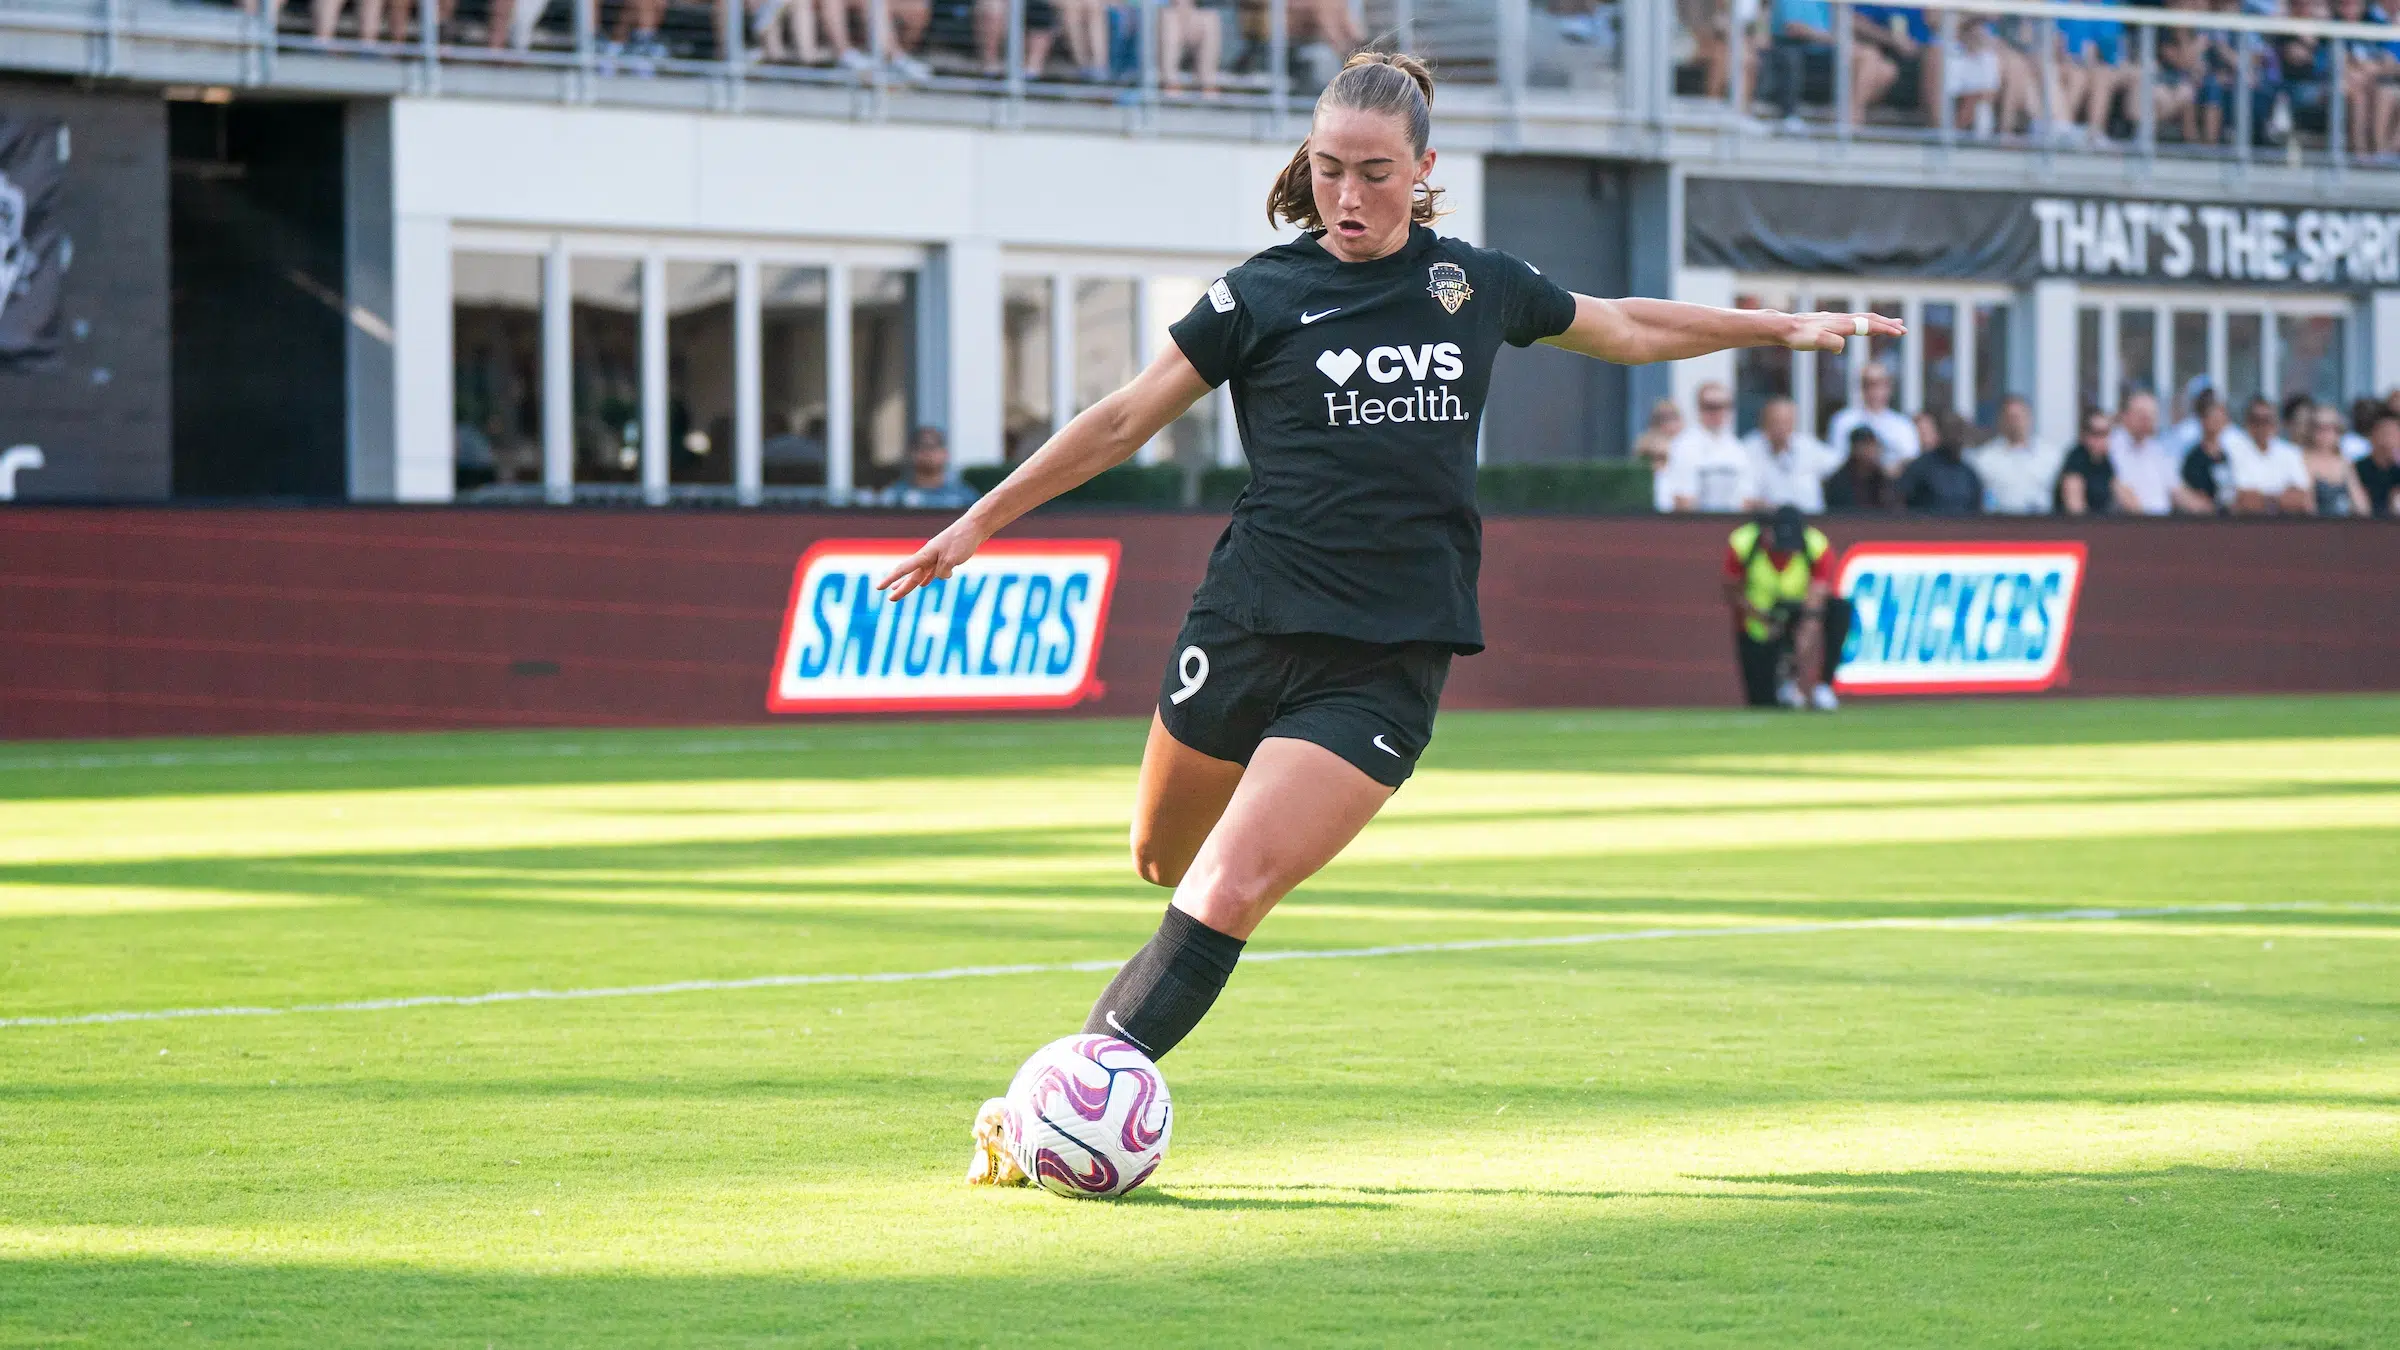 Tara McKeown goes to cross a soccer ball.